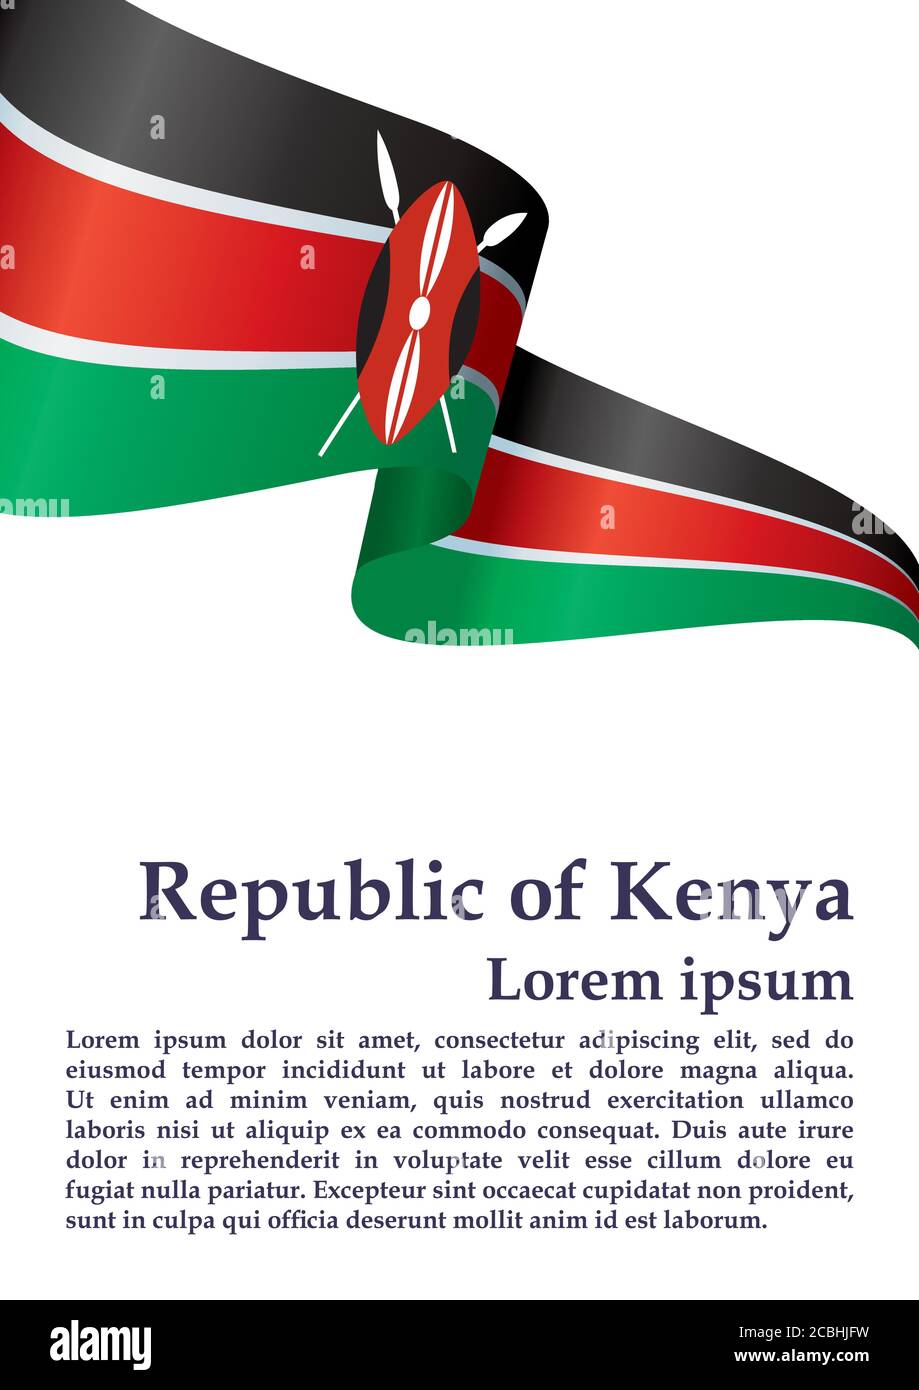 Flagge Kenias, Republik Kenia. Vorlage für Award Design, ein offizielles Dokument mit der Flagge Kenias. Helle, farbenfrohe Vektorgrafik. Stock Vektor